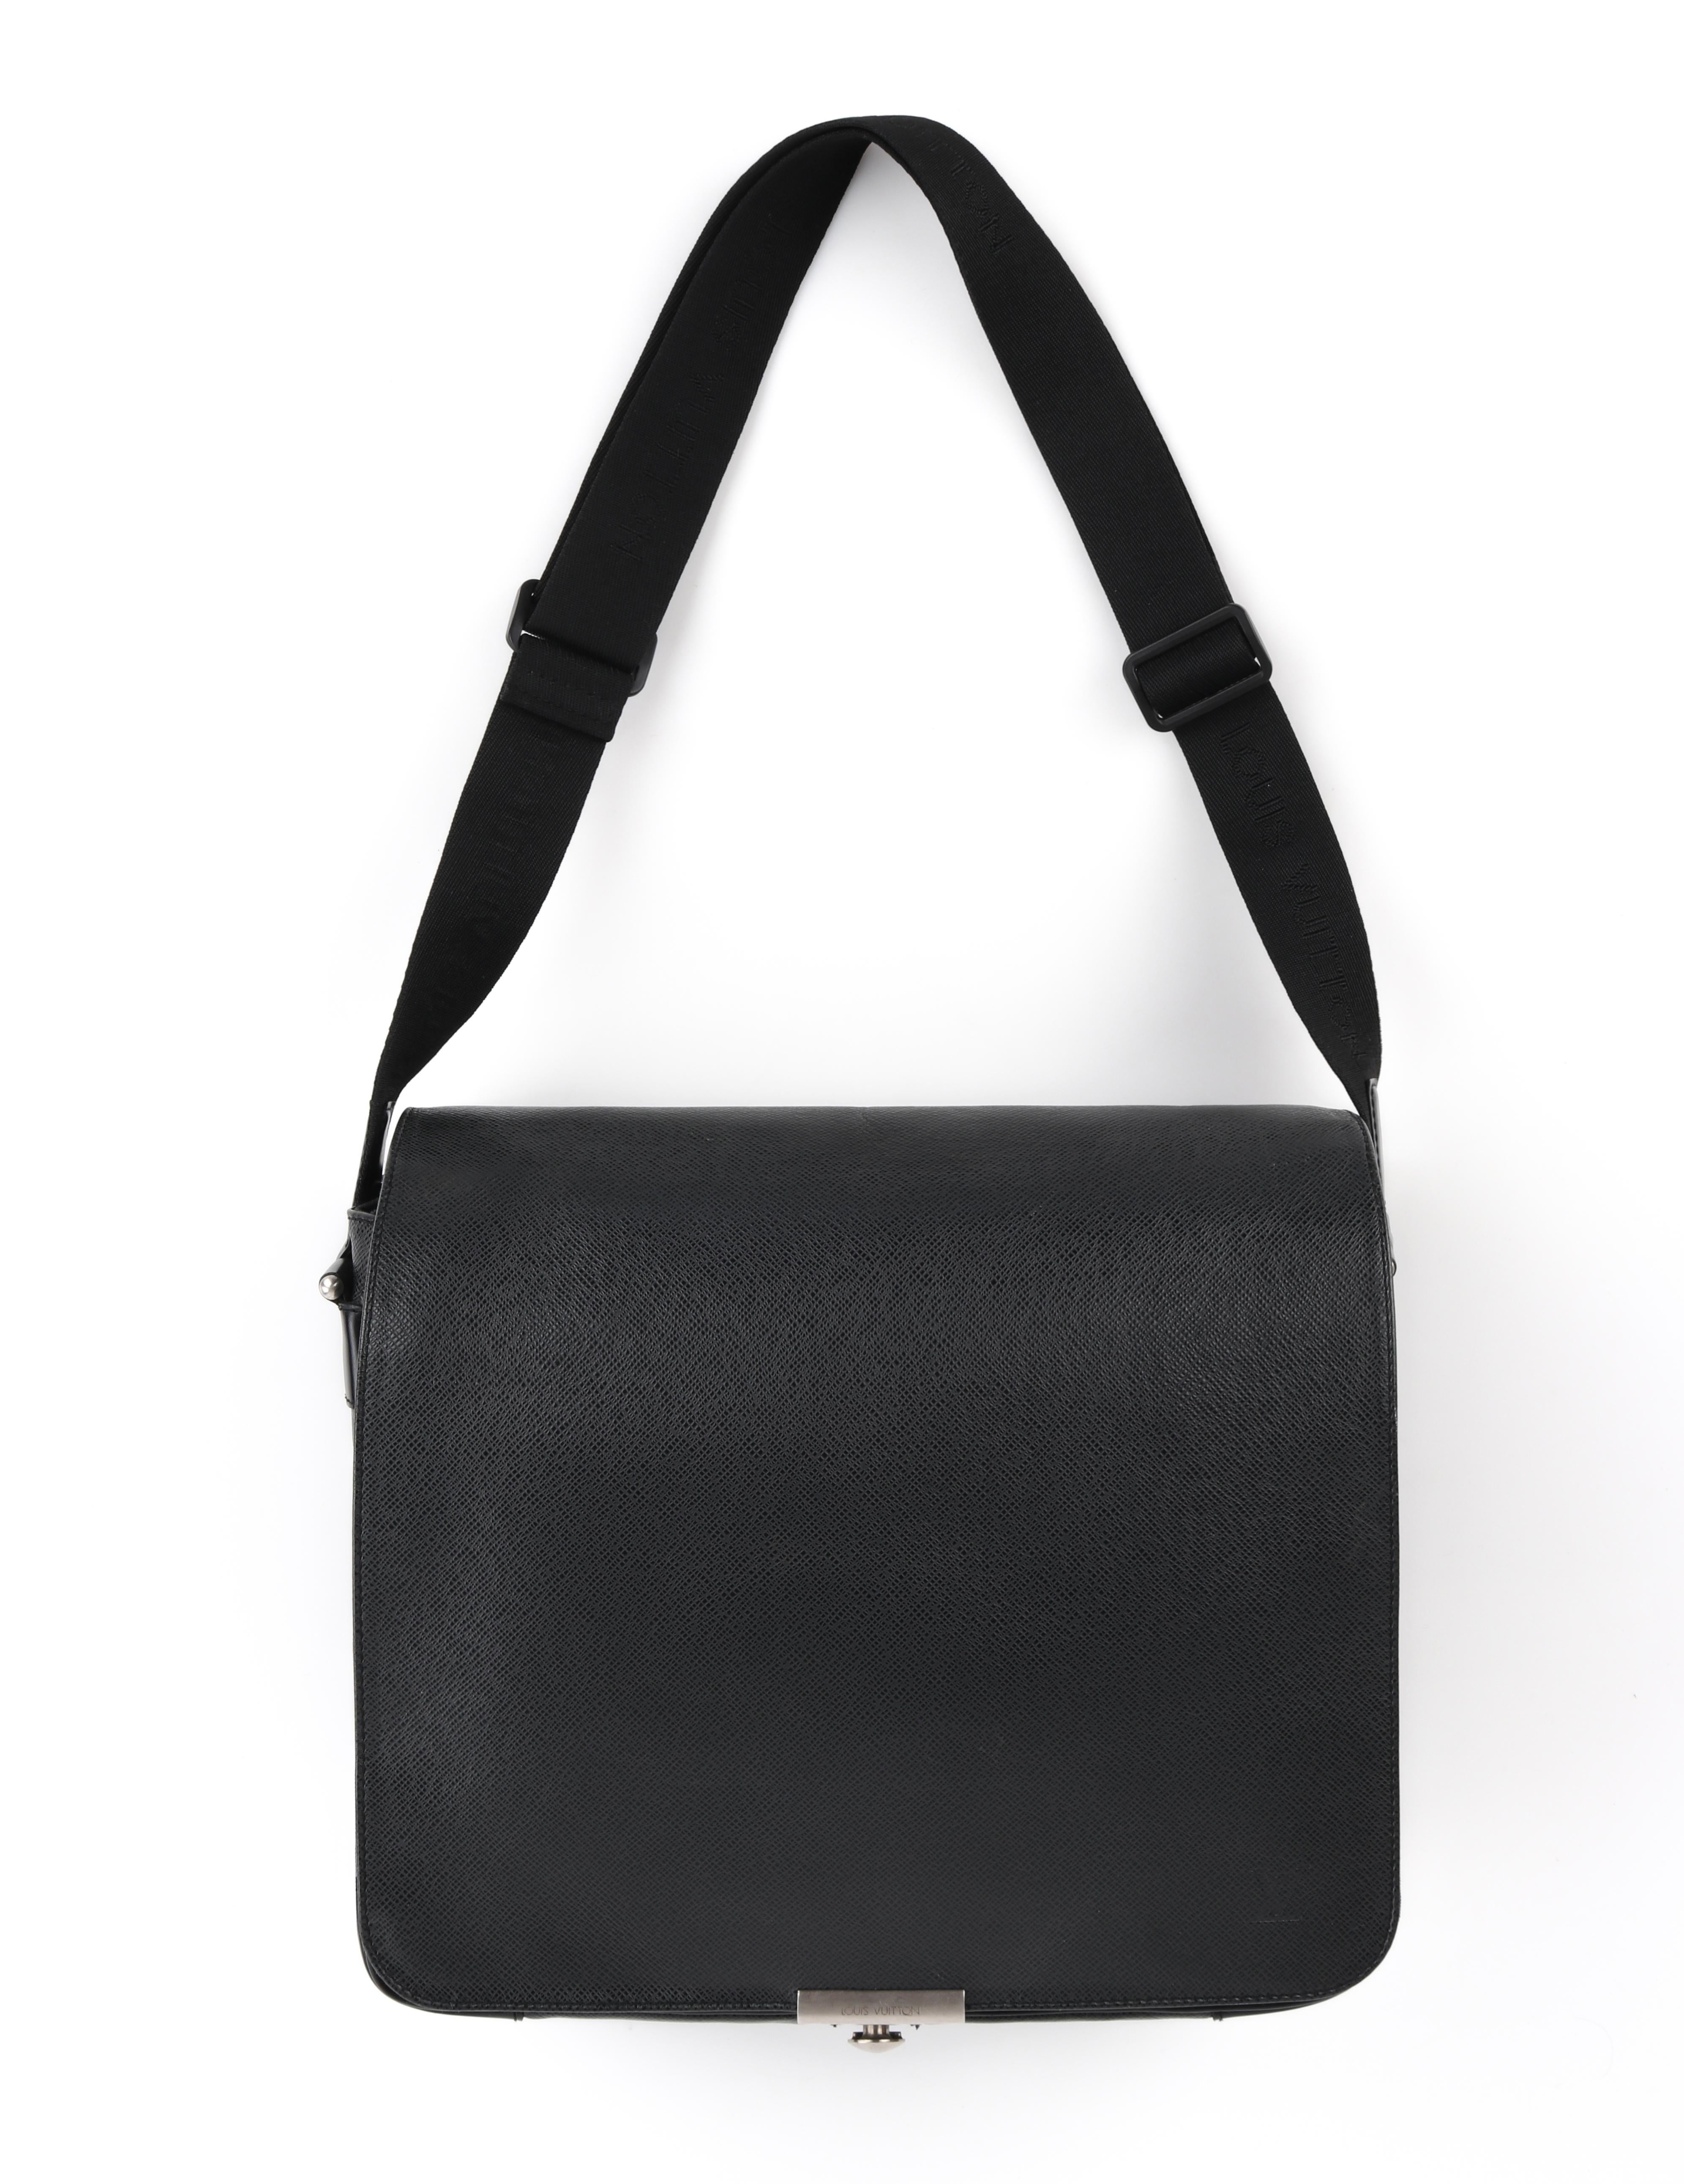 LOUIS VUITTON c. 2002 “Viktor” Black Green Taiga Leather Messenger Bag  
 
Estimated Retail: $1410	
 
Brand / Manufacturer: Louis Vuitton	
Designer: Marc Jacobs
Manufacturer Style Name: Viktor 
Style: Messenger Bag / Laptop Bag / Crossbody
Color(s):